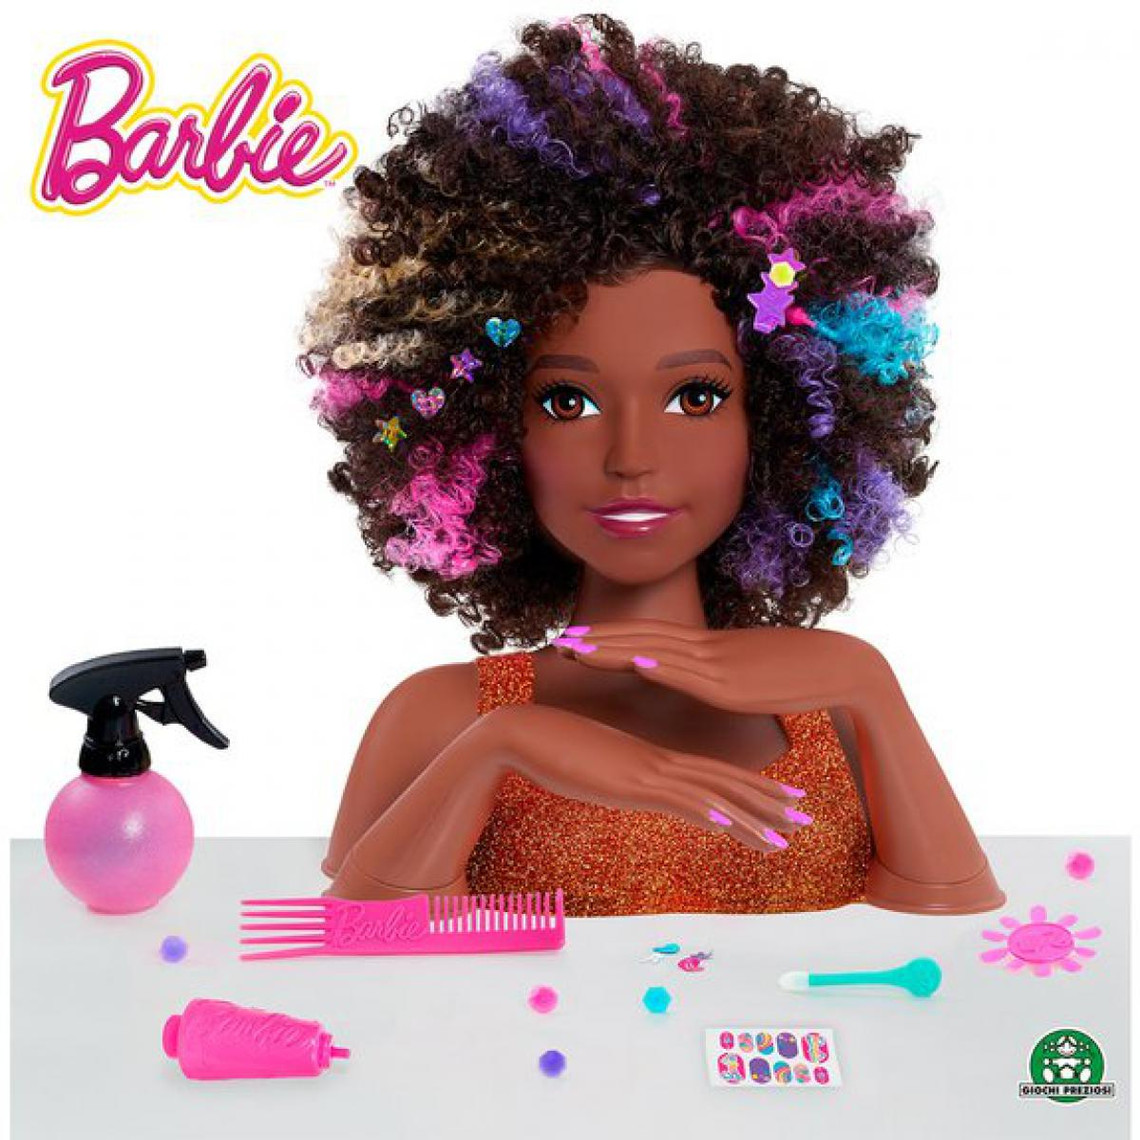 https://www.3suisses.fr/media/produits/giochi-preziosi/img//barbie-tete-a-coiffer-afro-style-3321580-6021704_4_1140x1140.jpg